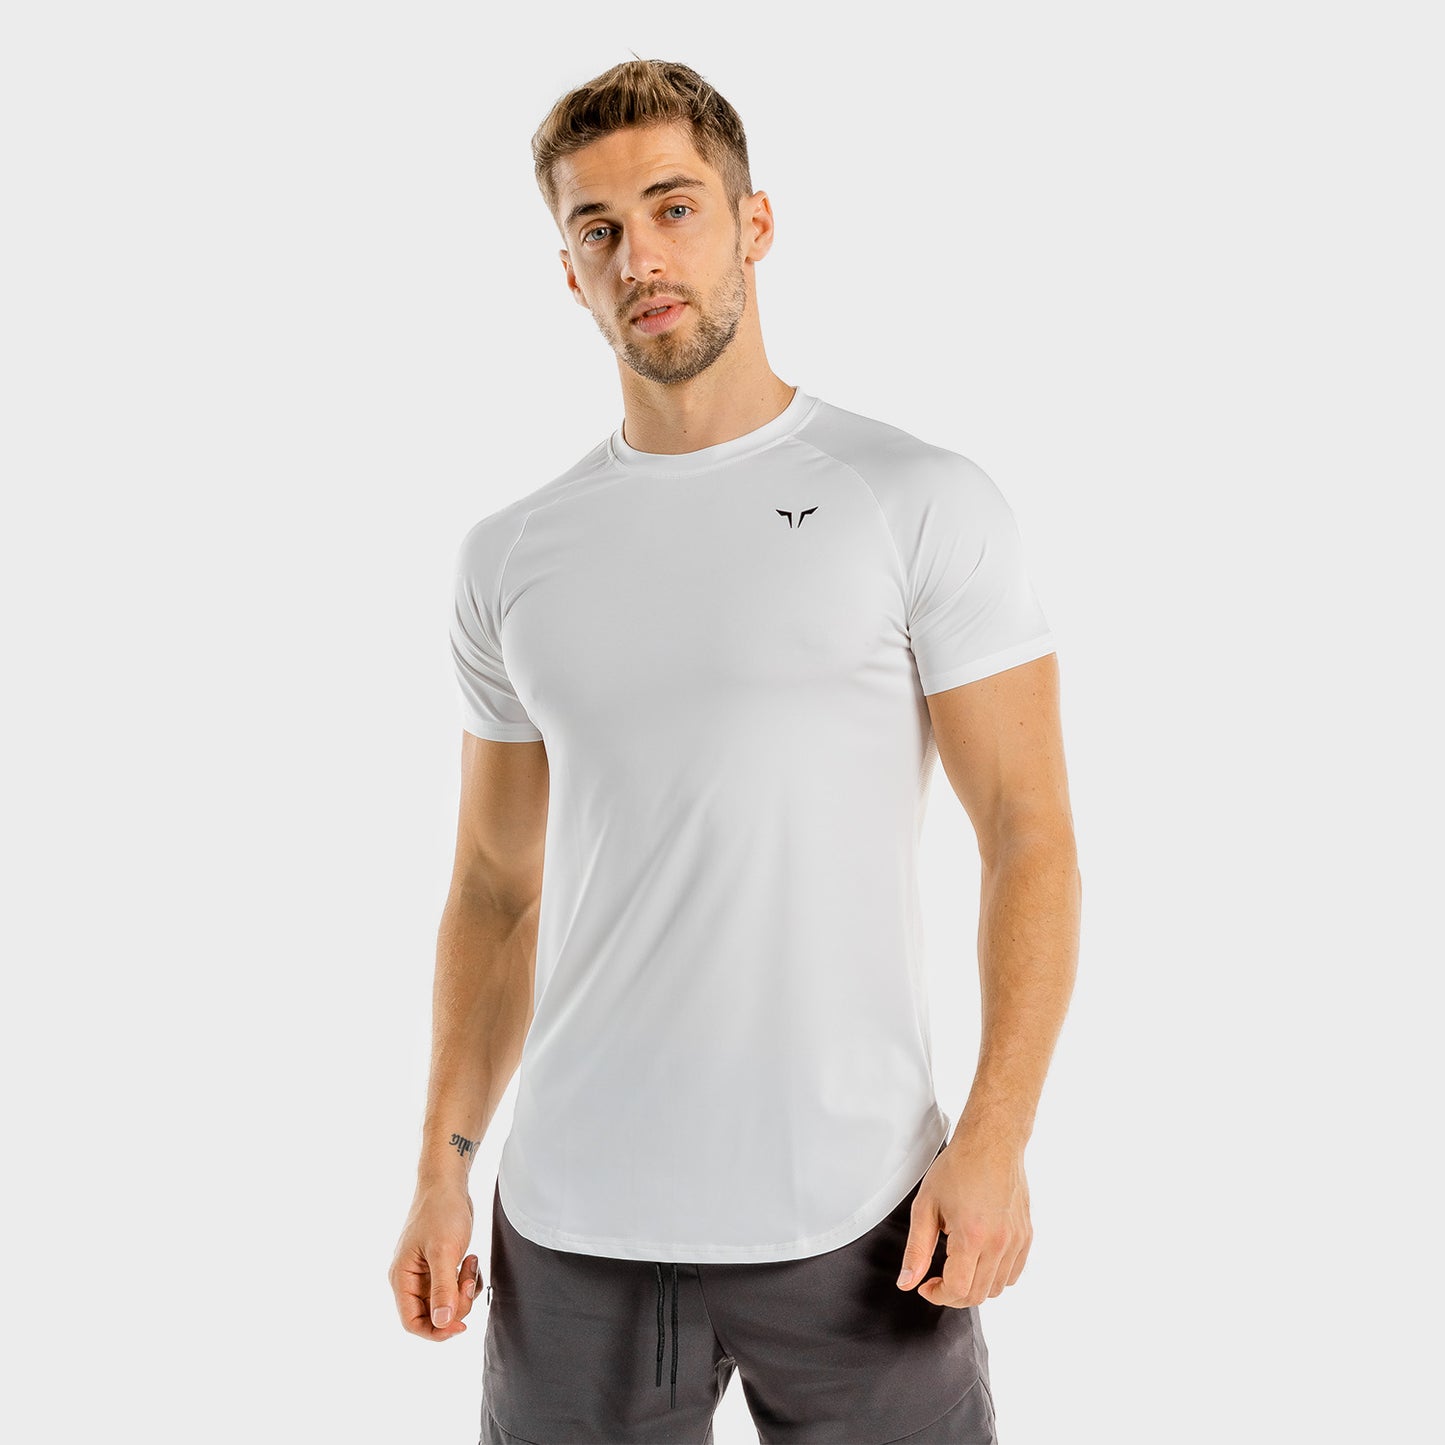 AE, Limitless Razor Tee - White, Gym T-Shirts Men